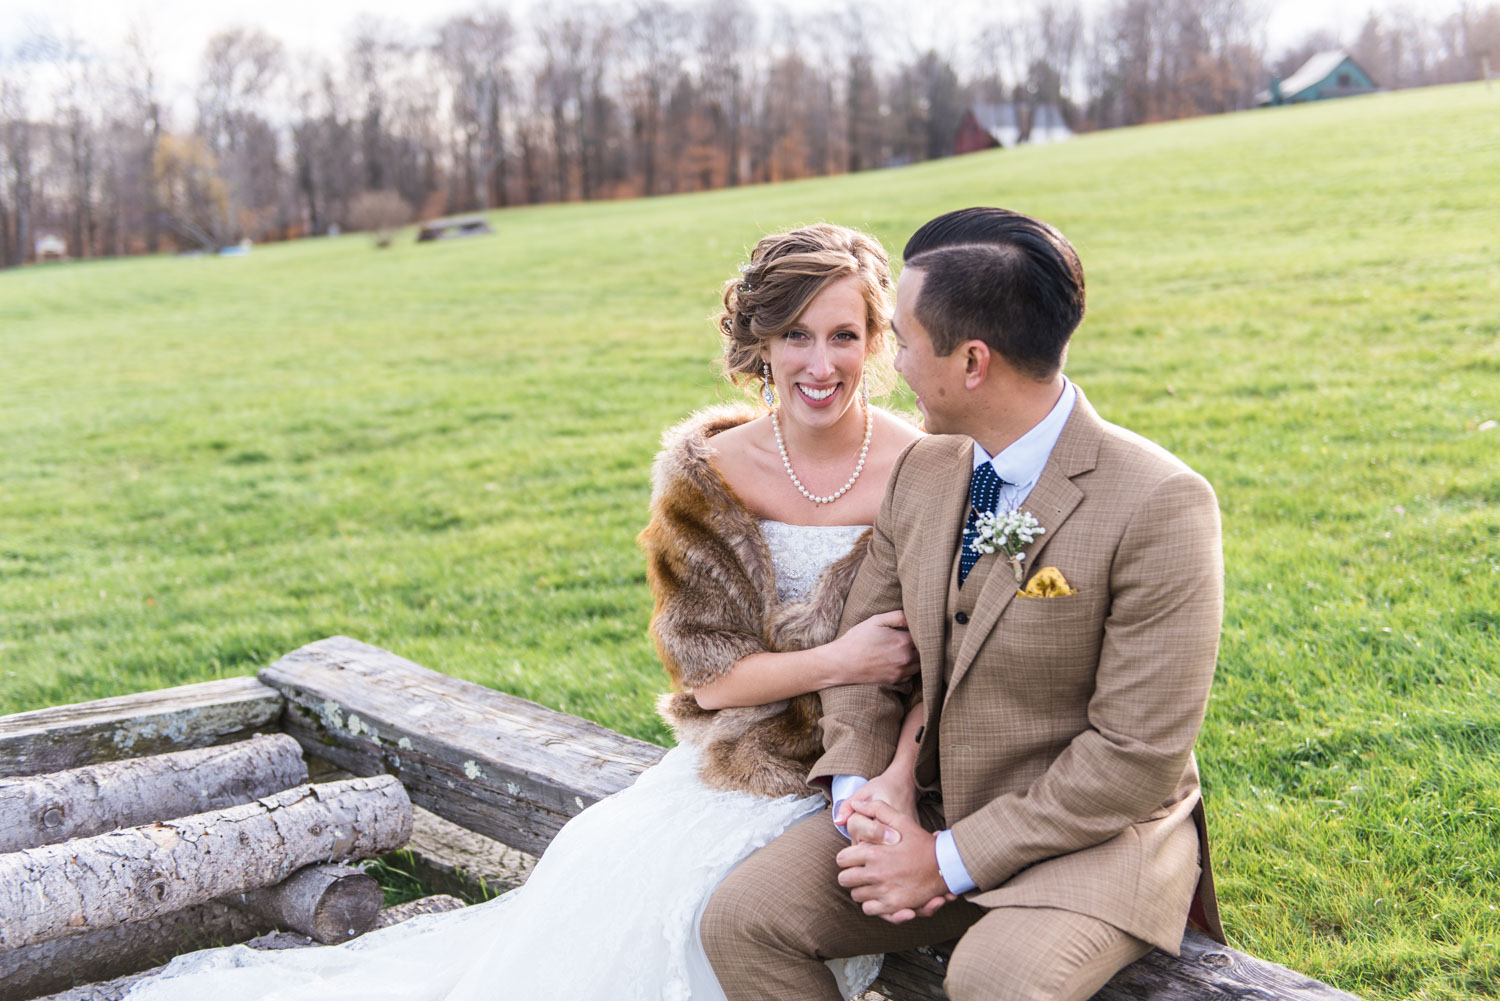 Sam + FJ | Romantic Mountain Top Inn and Resort Vermont Winter Wedding | Boston and New England Wedding Photography | Lorna Stell Photo